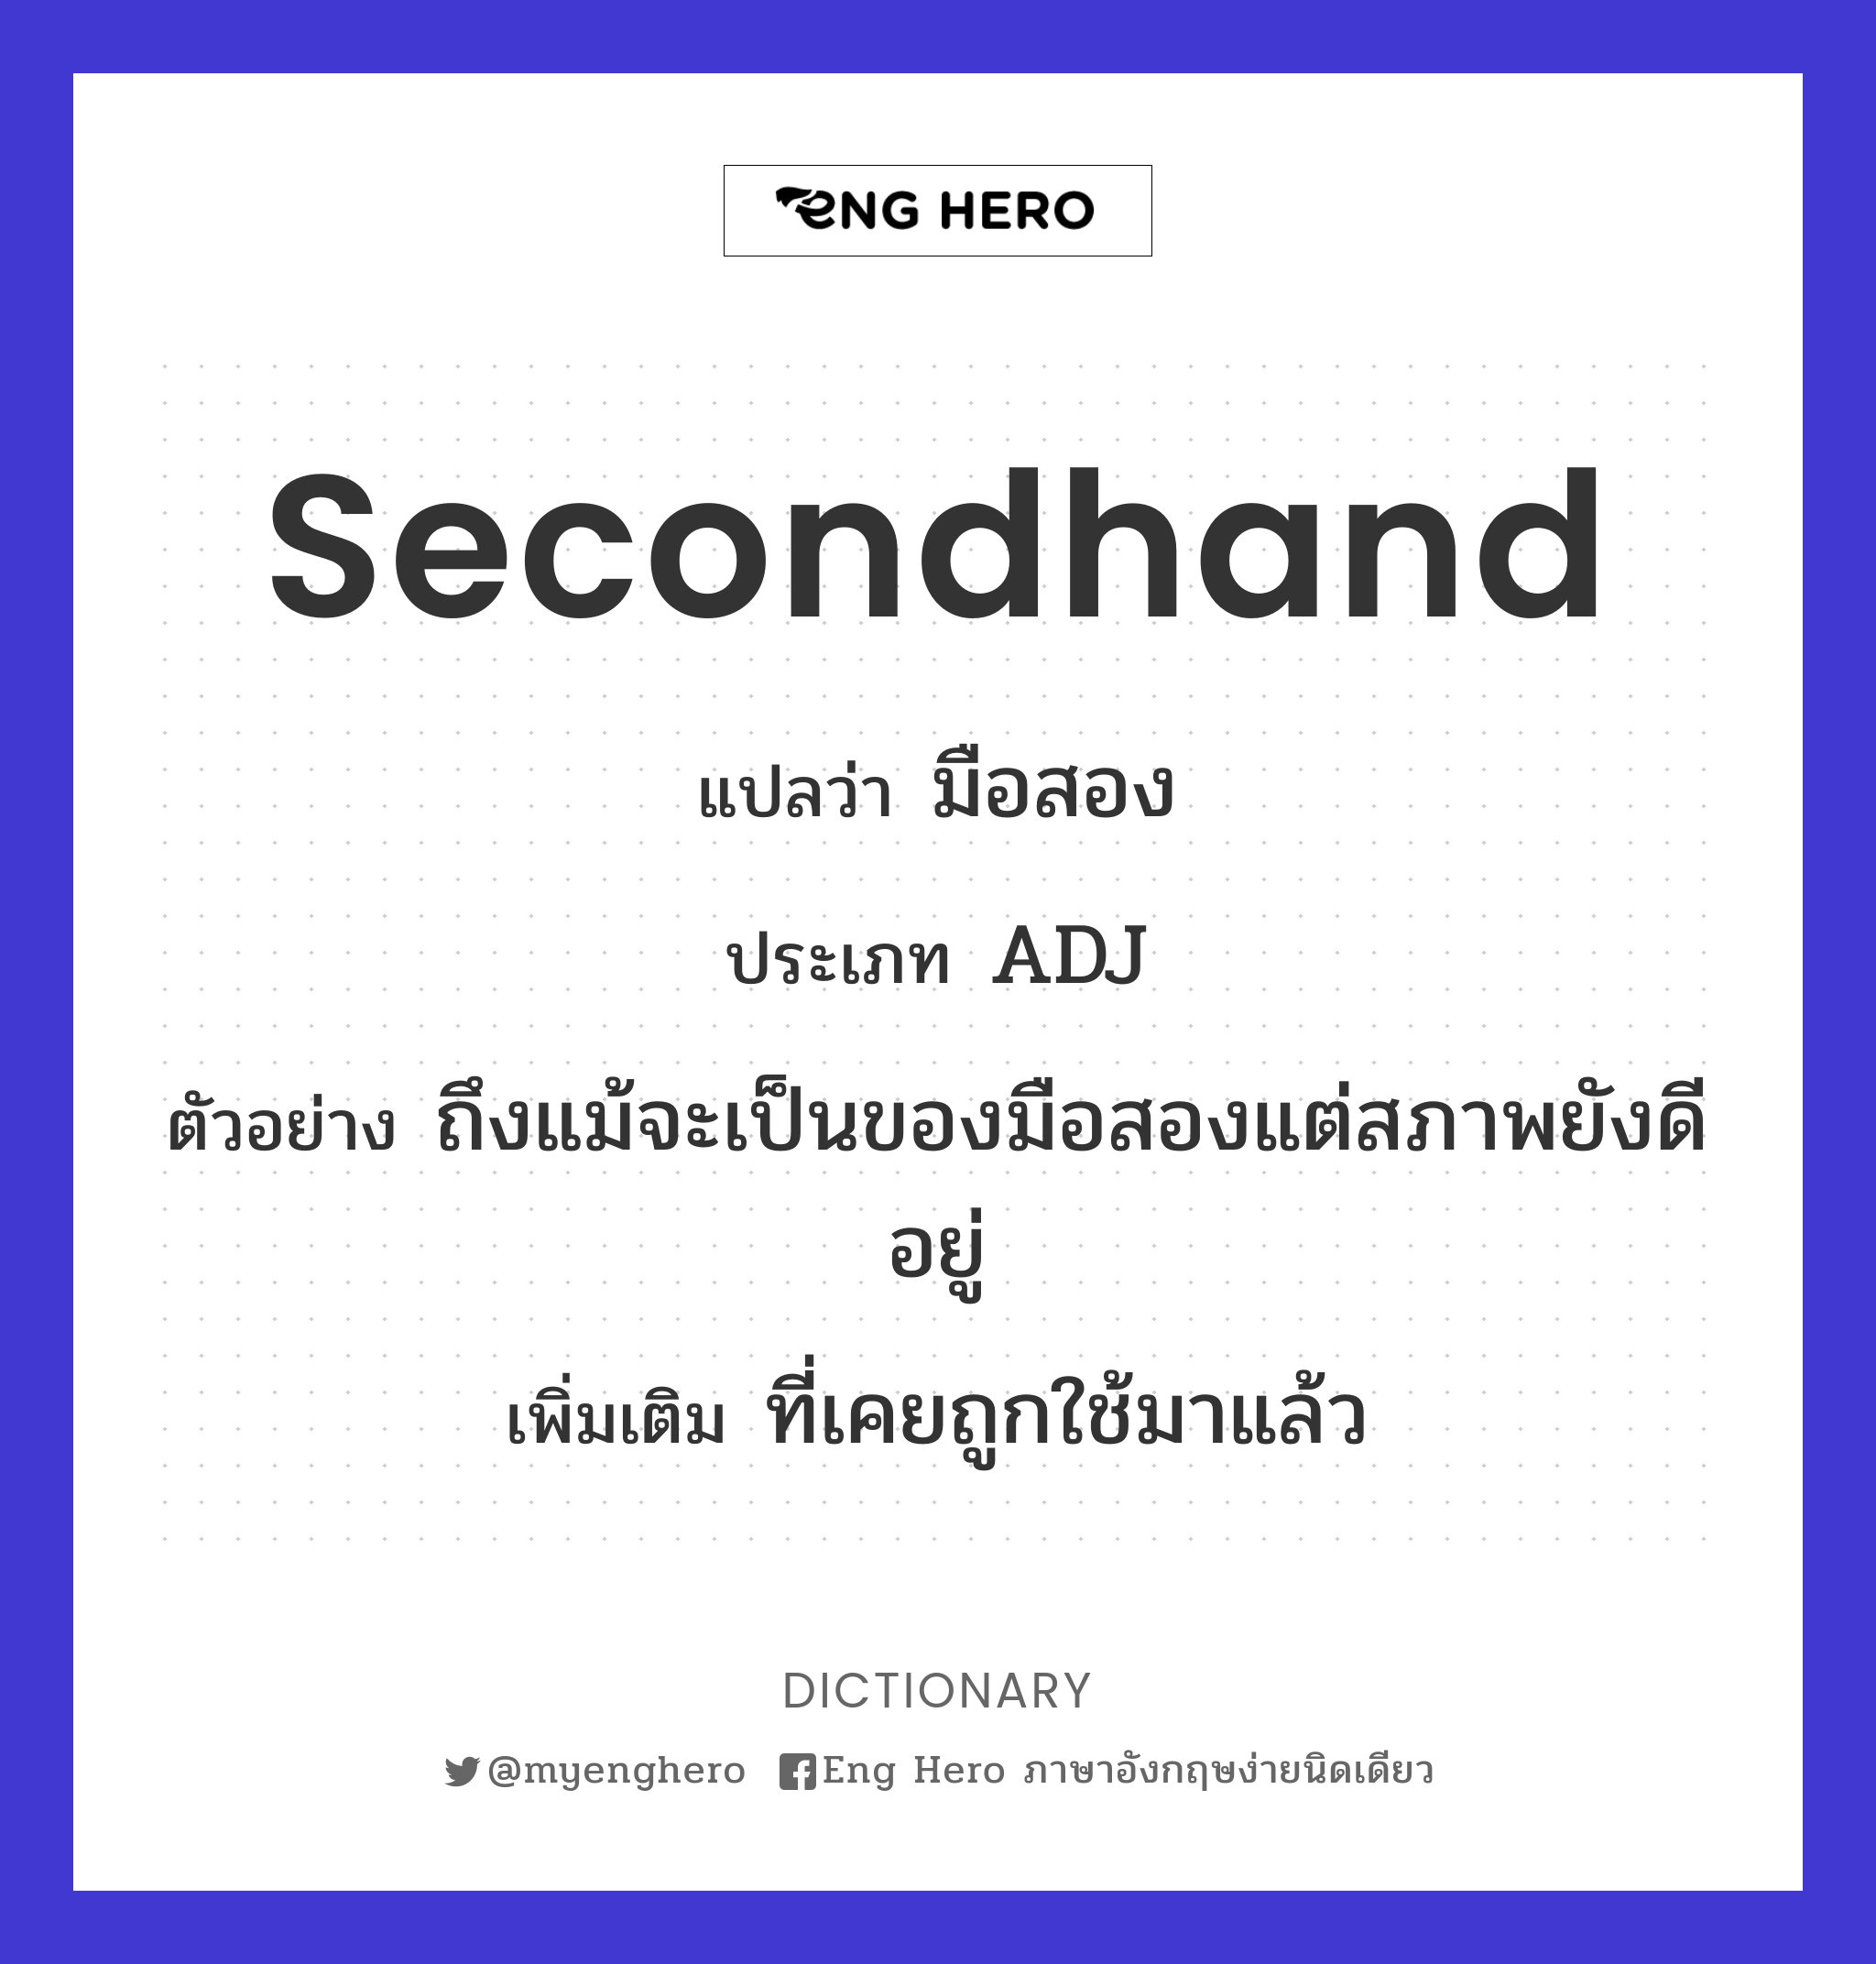 secondhand